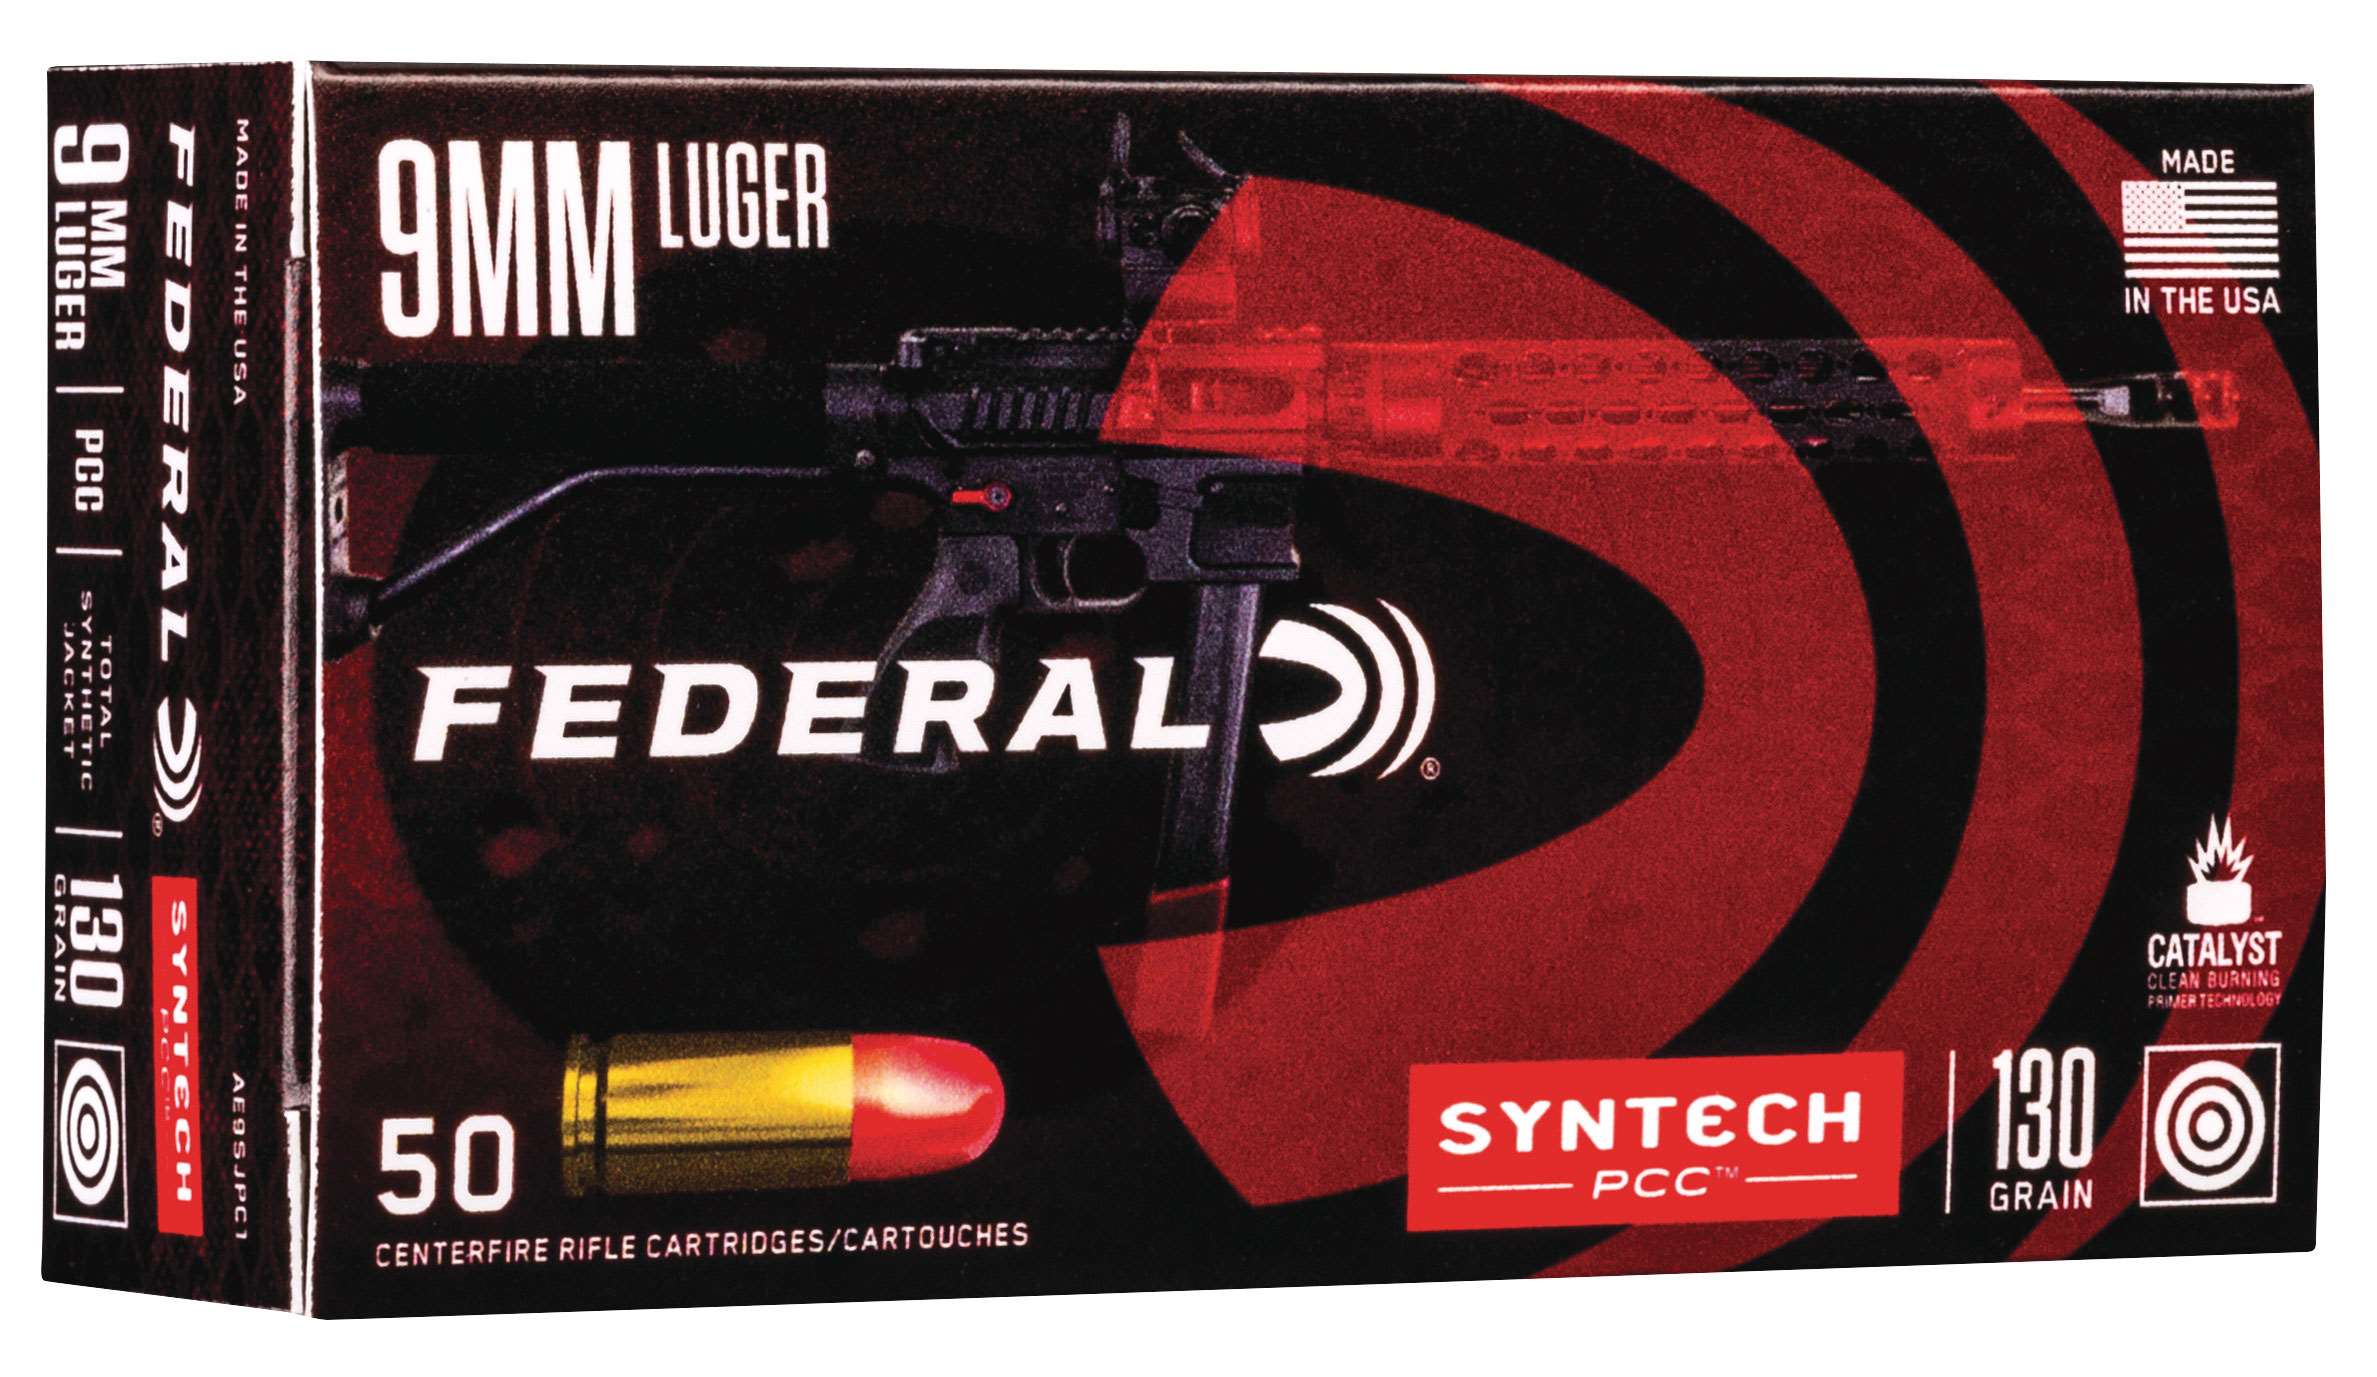 Syntech 9mm PCC ammo